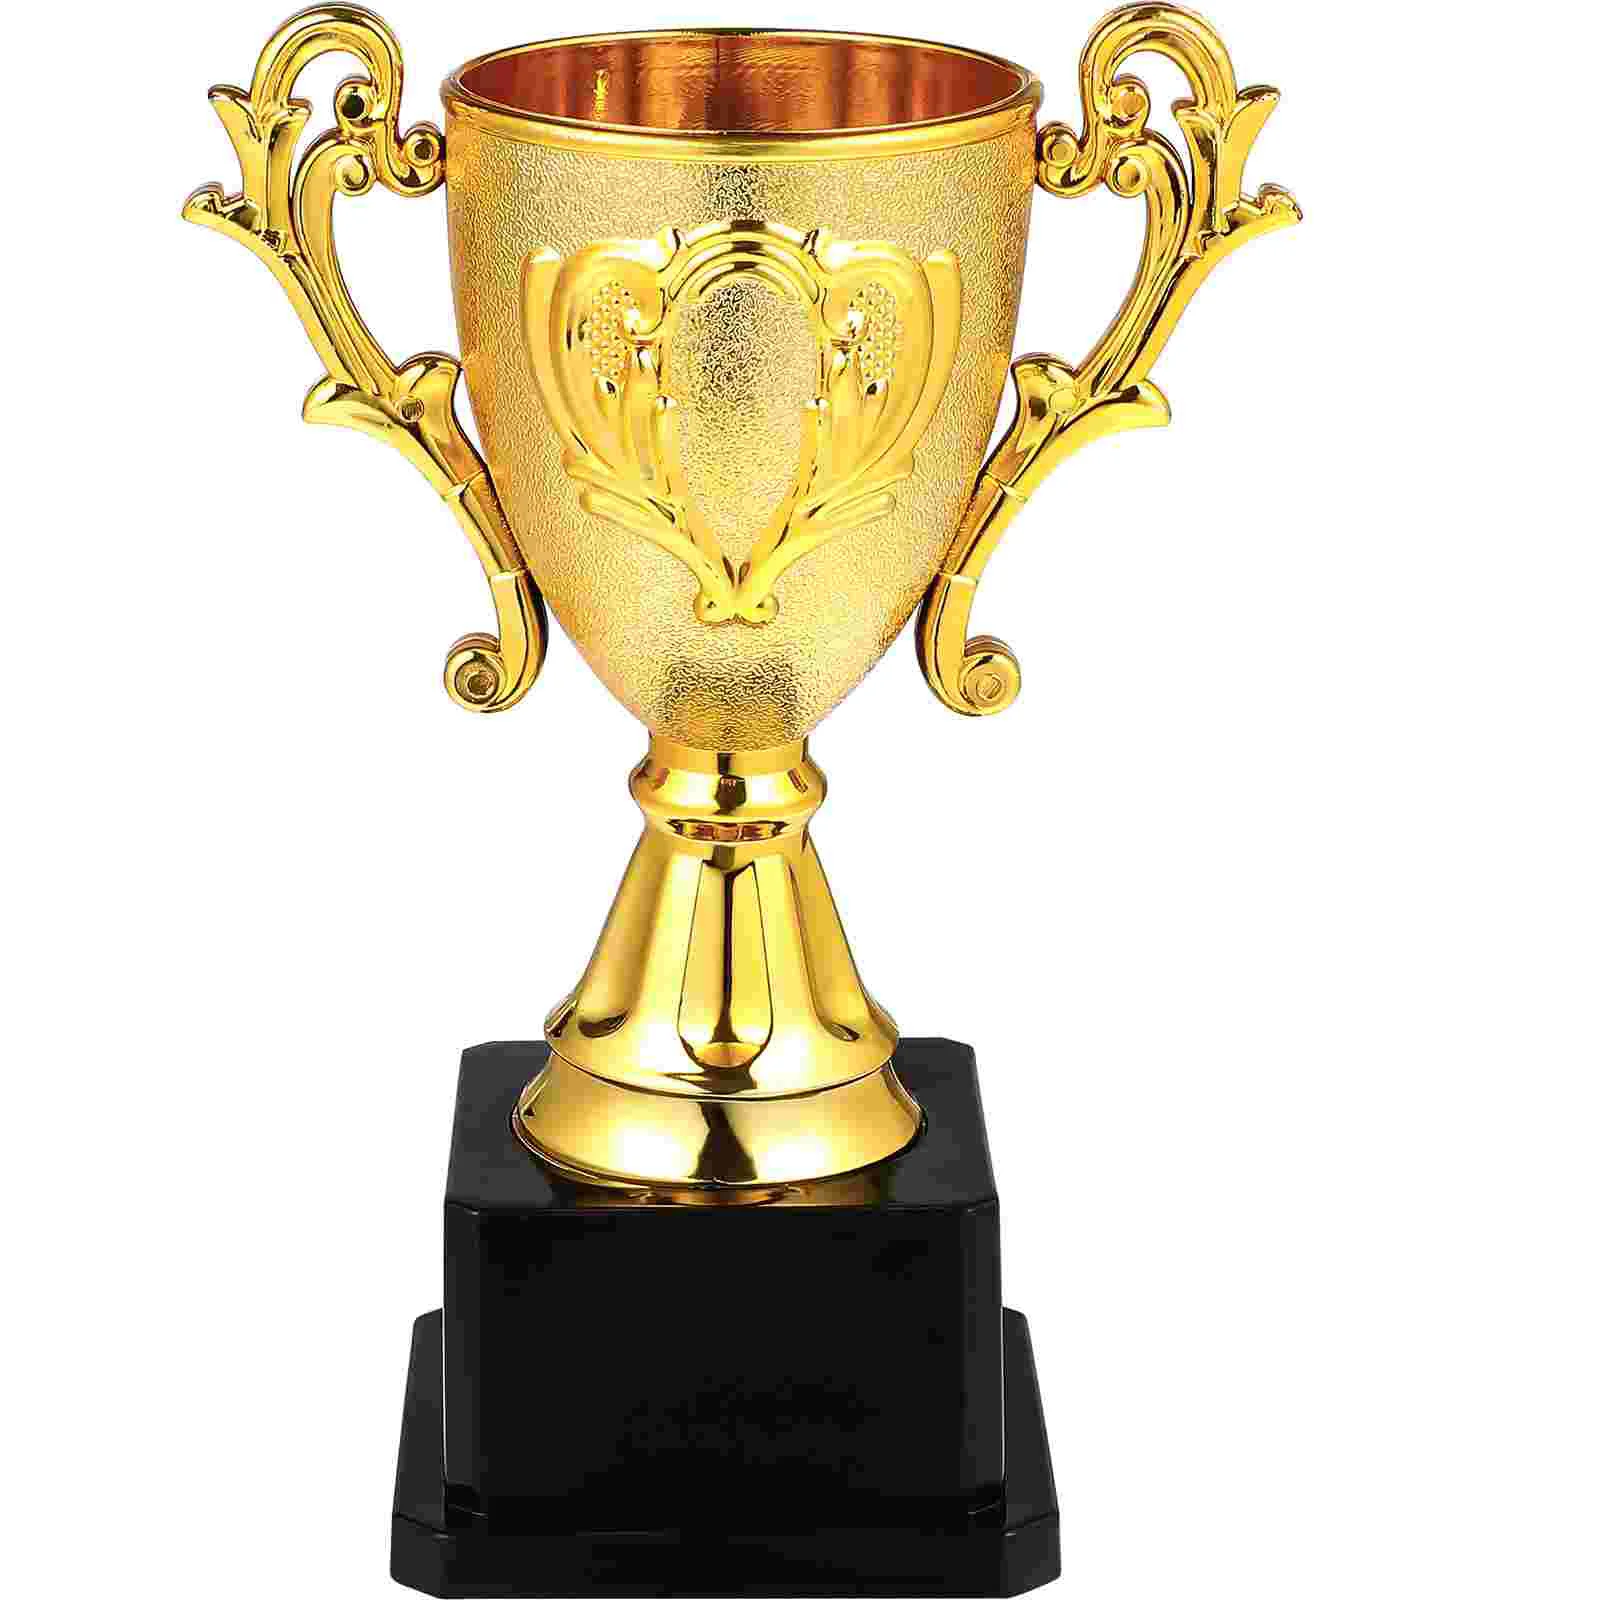 

Trophies Award Trophy Gold Plastic Winner Cups Mini Golden Cup Kids Awards Gift Children Reward Toy Basketball